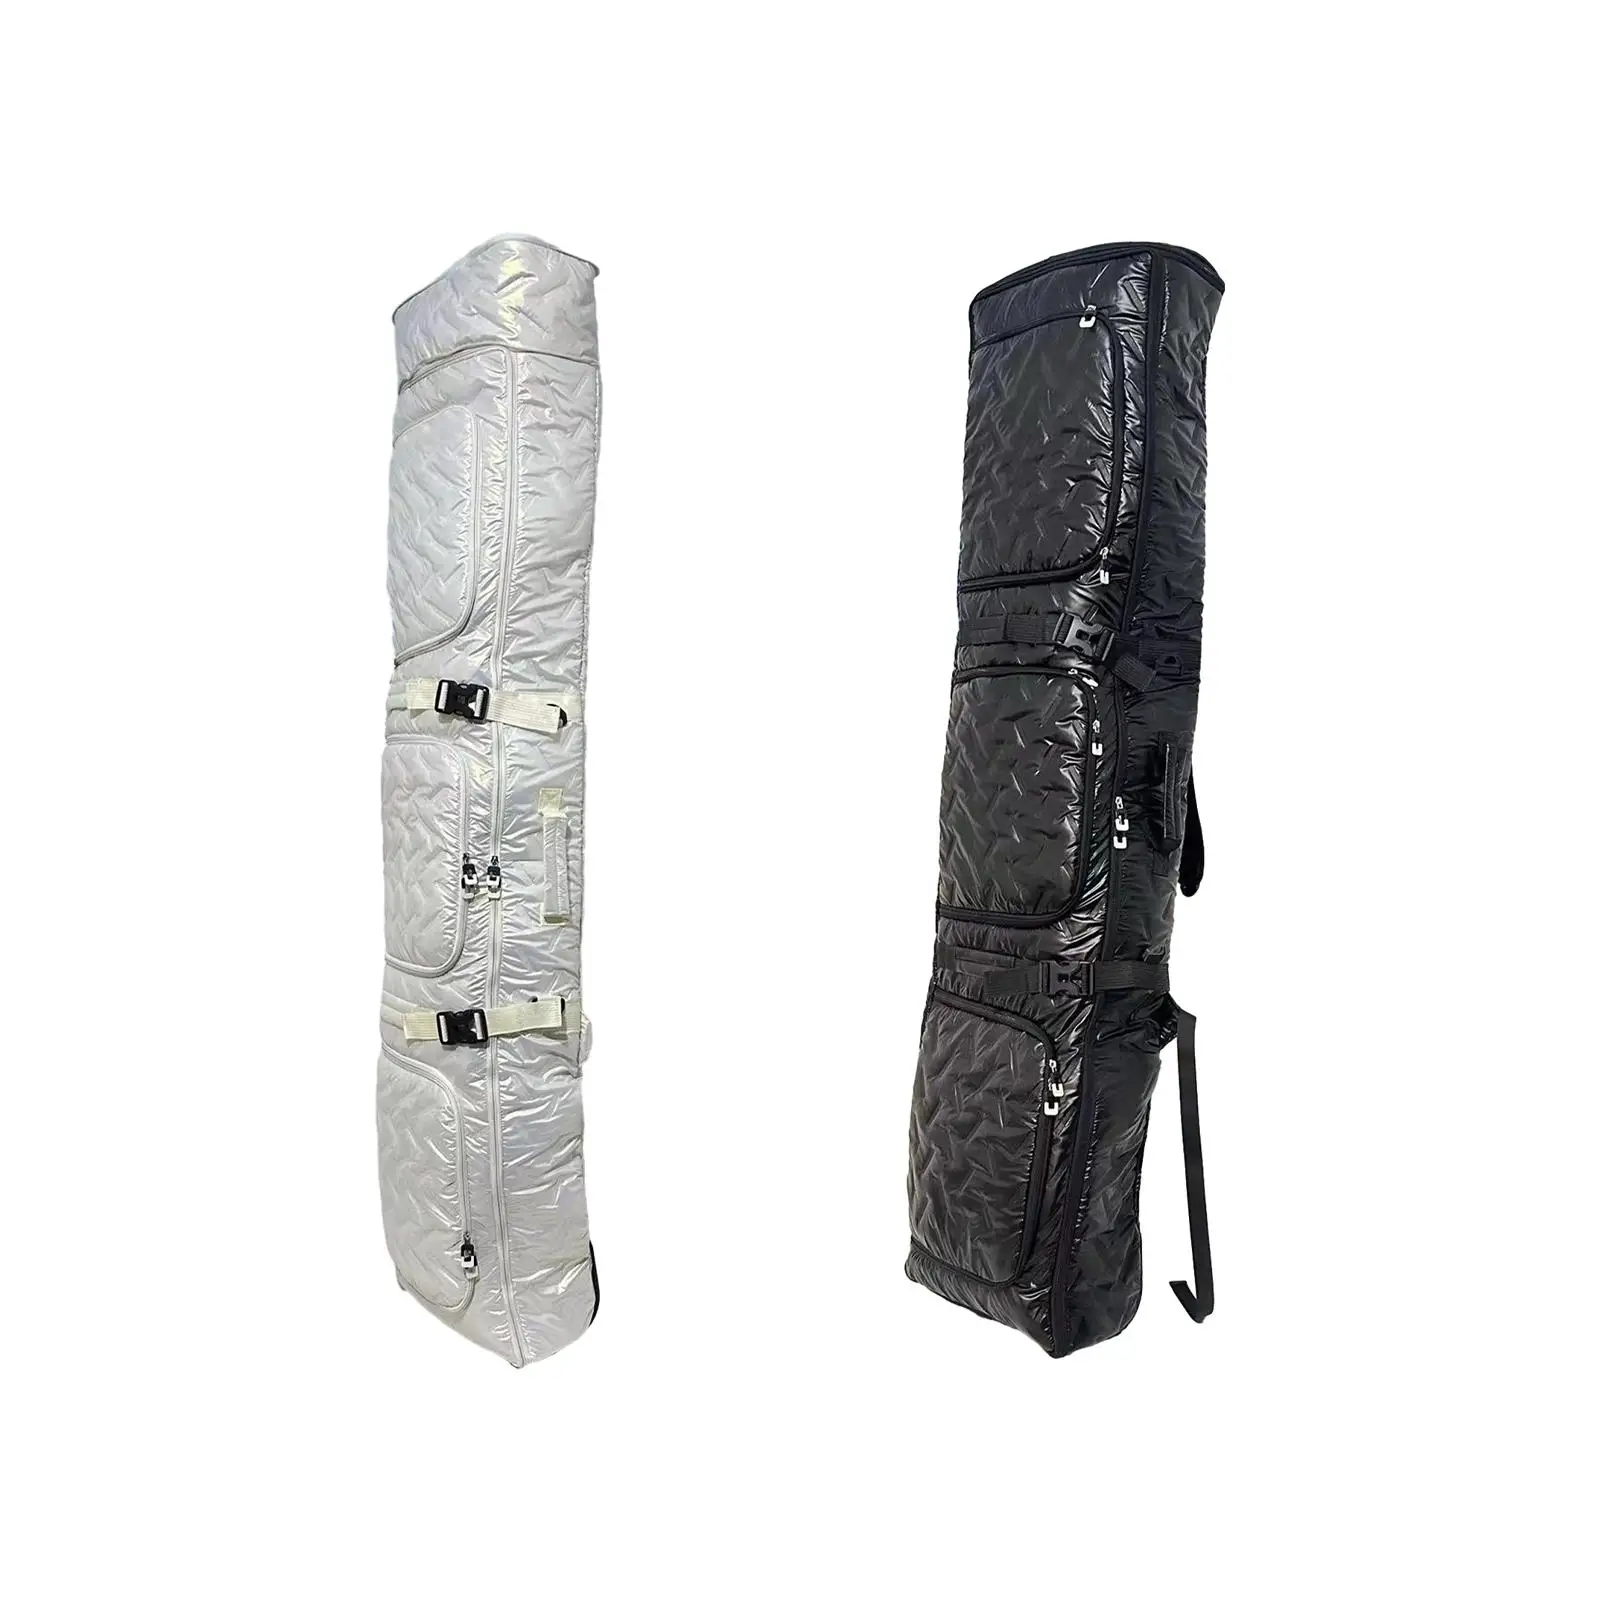 Snowboard Bag with Wheels Ski Bag Pouch Protective Ski Travel Bag for Gloves